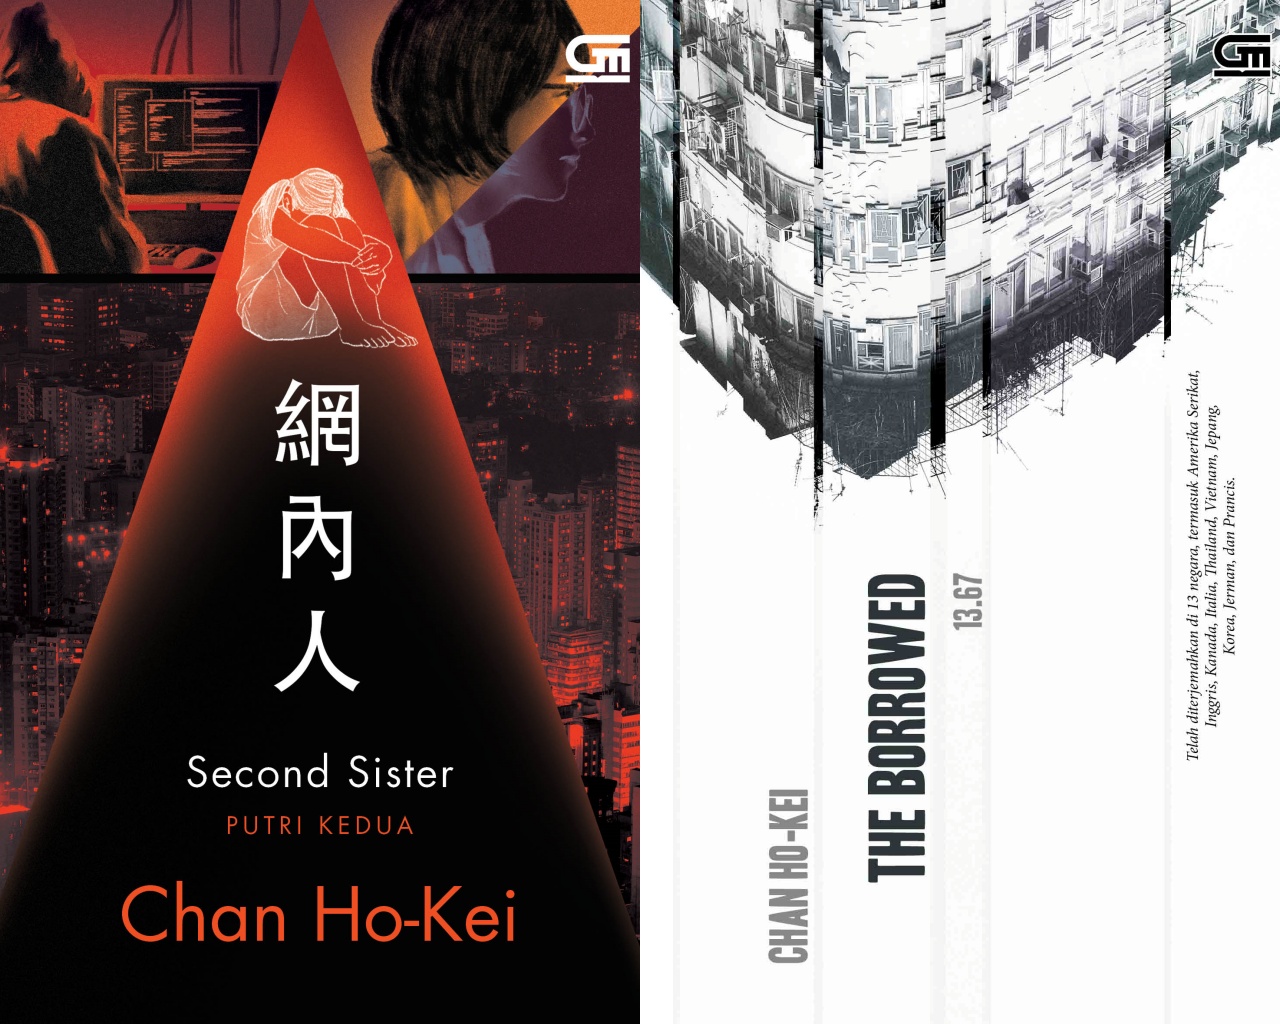 misteri-chan-ho-kei-tantangan-penulis-novel-kriminal-asia